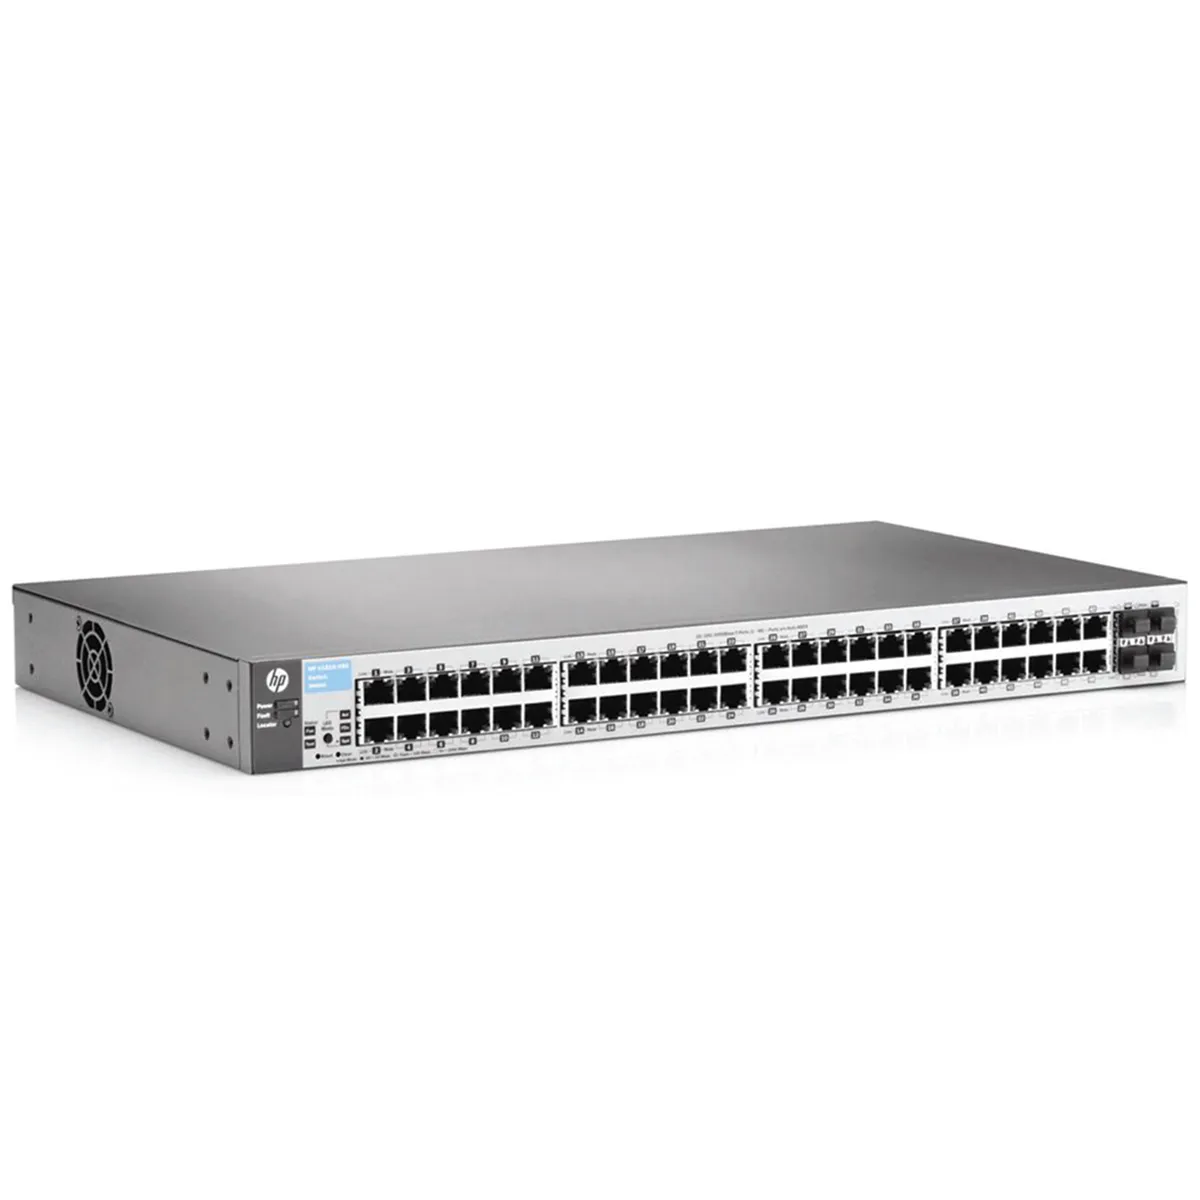 HP ProCurve 1810-48G (J9660A) - 48xRJ-45 1Gbps Managed Switch